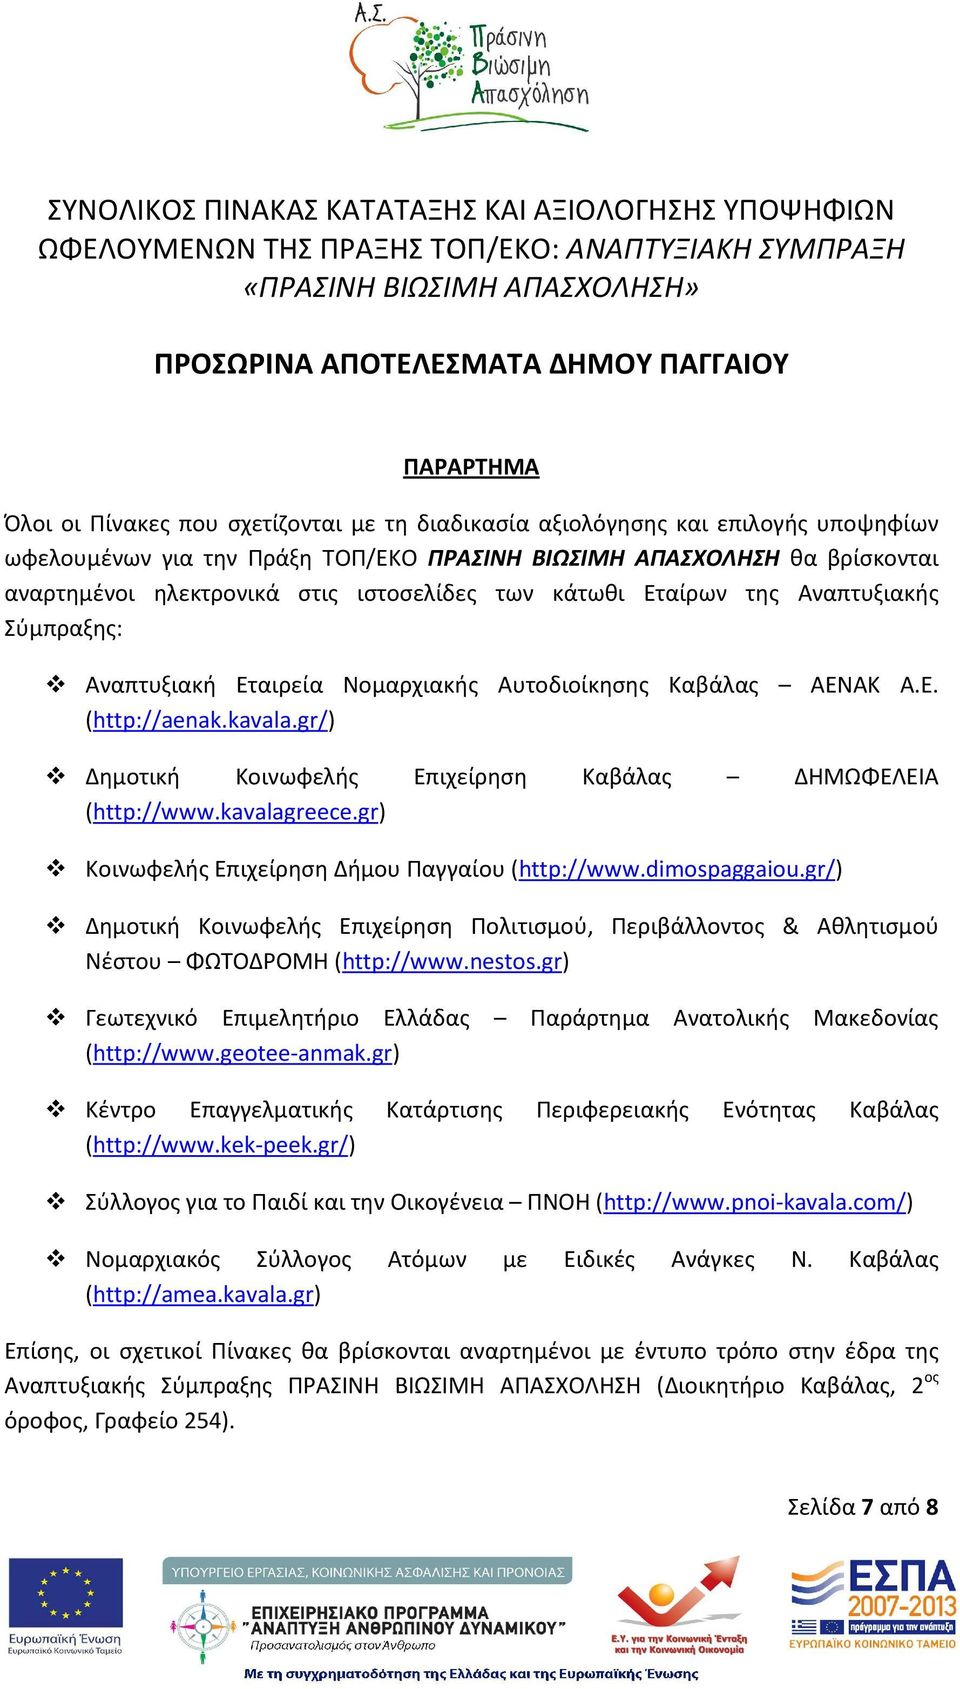 gr/) Δημοτική Κοινωφελής Επιχείρηση Καβάλας ΔΗΜΩΦΕΛΕΙΑ (http://www.kavalagreece.gr) Κοινωφελής Επιχείρηση Δήμου Παγγαίου (http://www.dimospaggaiou.